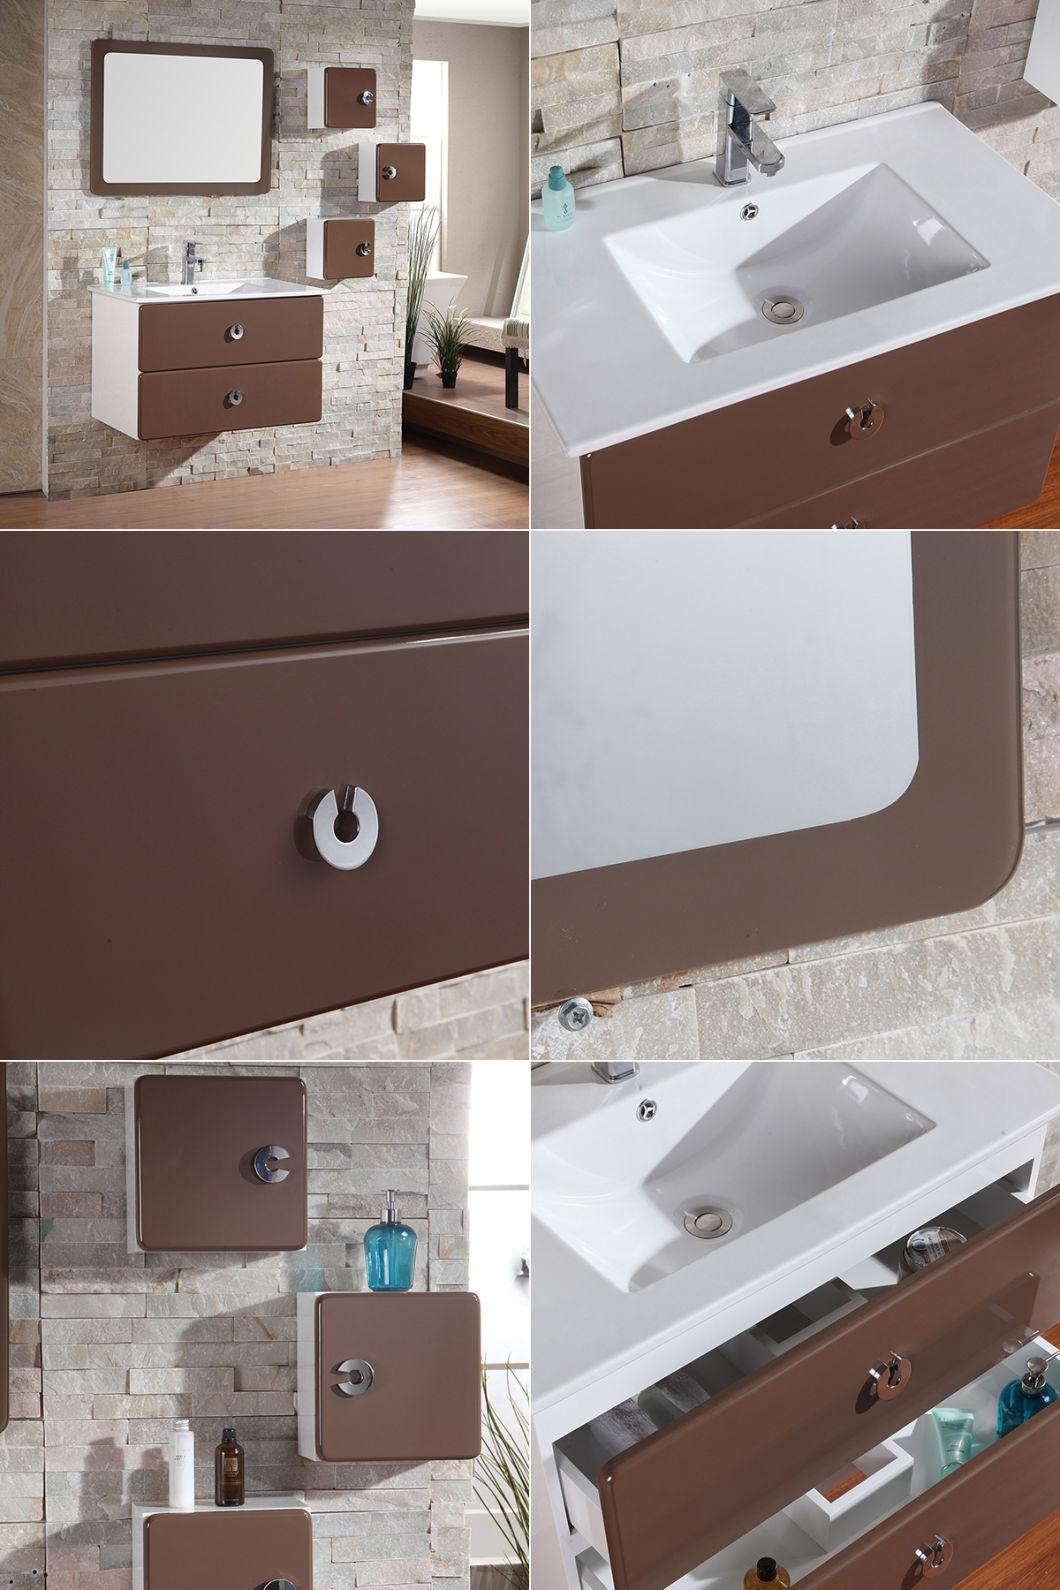 800mm Width Two Drawer Modern Wall Mounted Ceramic Basin PVC Waterproof Bathroom Cabinet Furniture